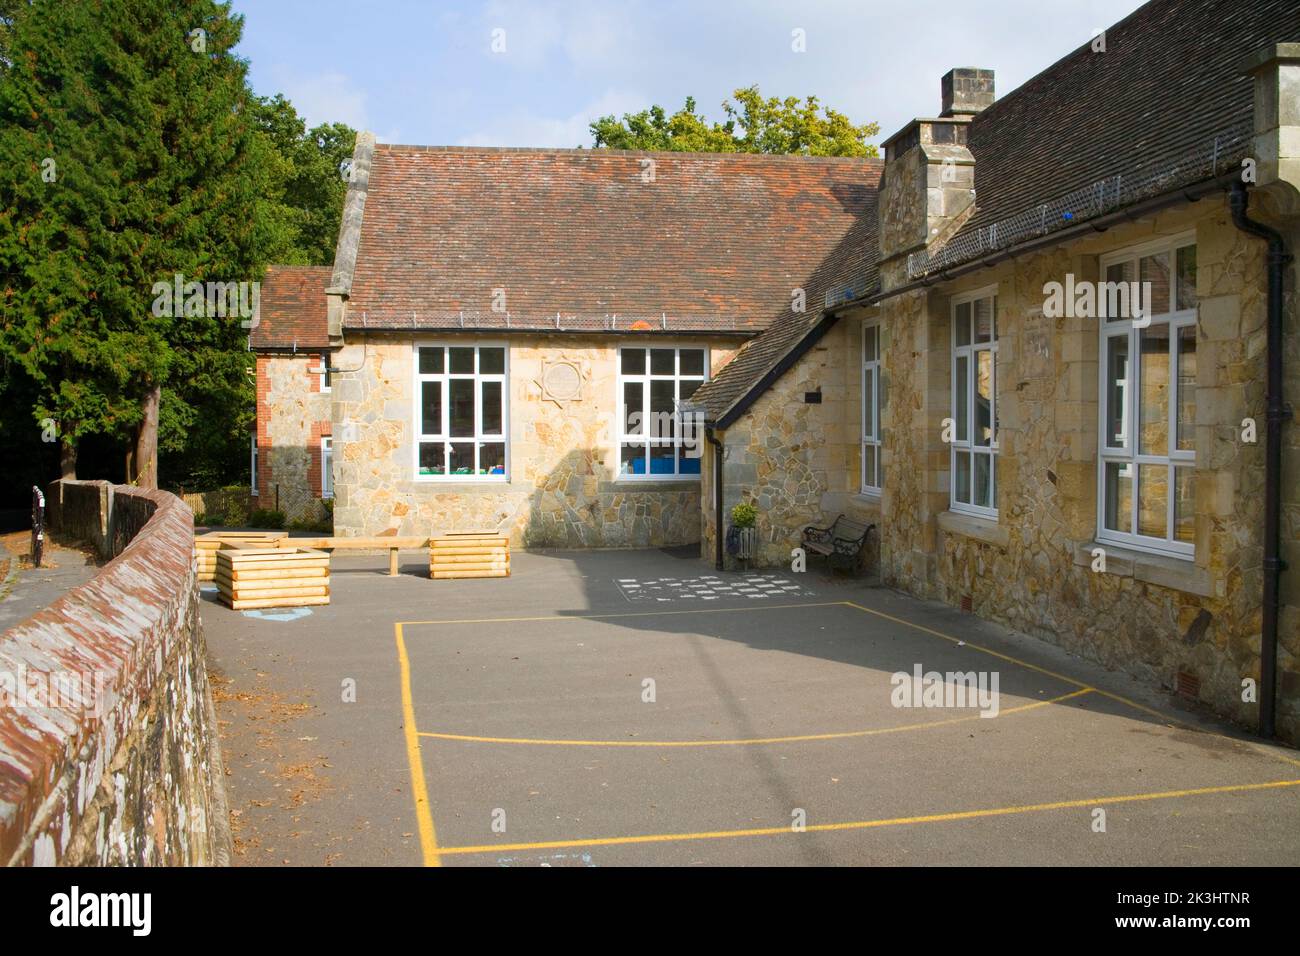 school yard at danehill village infants school in east sussex Stock Photo